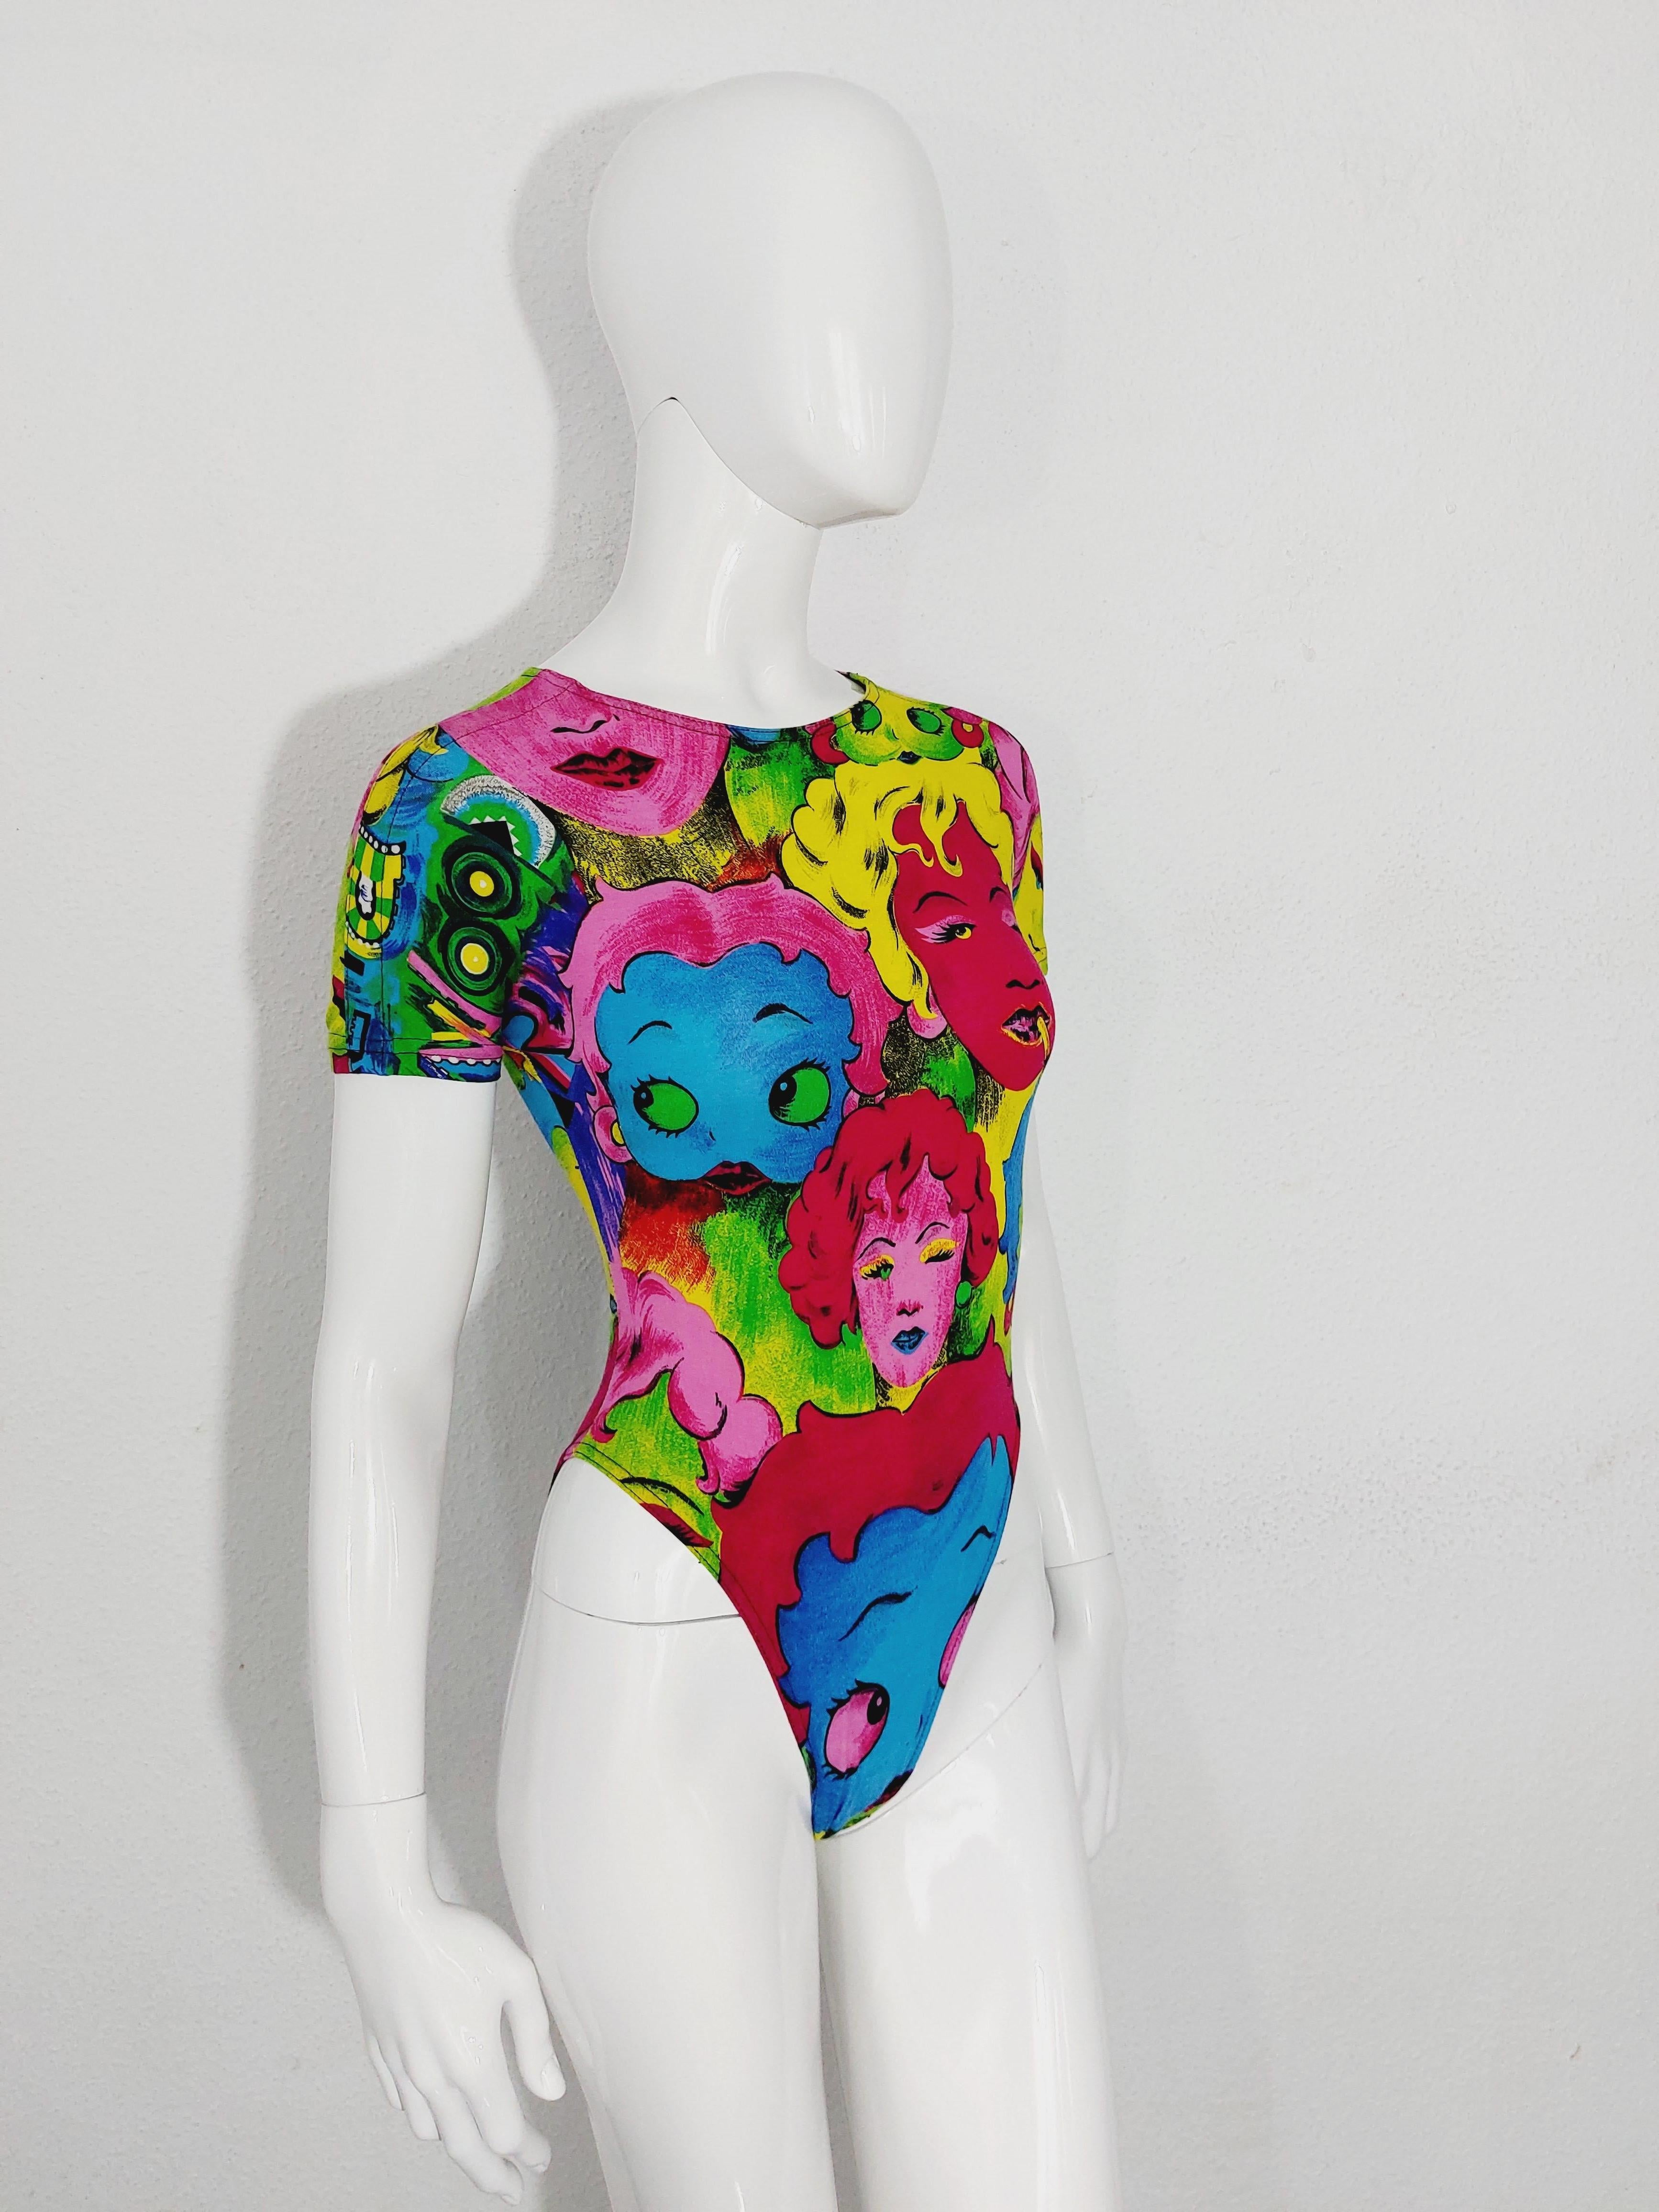 GIANNI VERSACE Andy Warhol Pop Art Marilyn Monroe Betty Boop SS91 Bodyuit Body For Sale 5